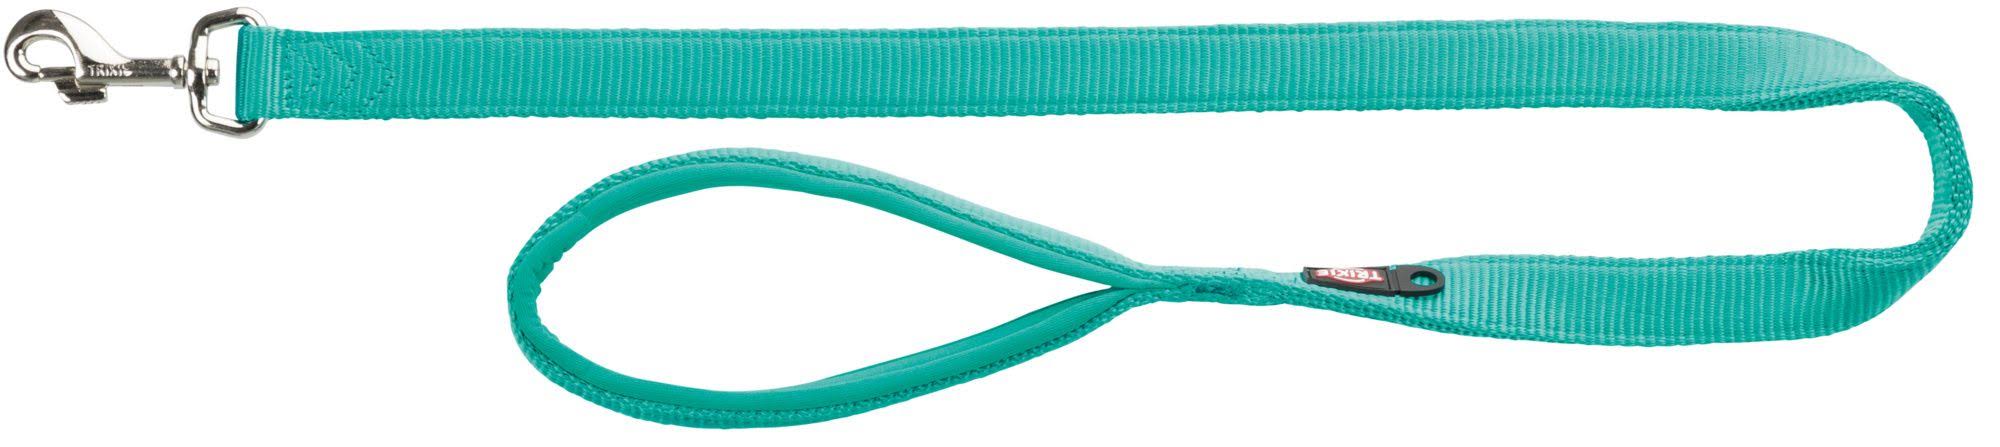 Trixie Premium Leash - Turquoise (extra Small - Small)